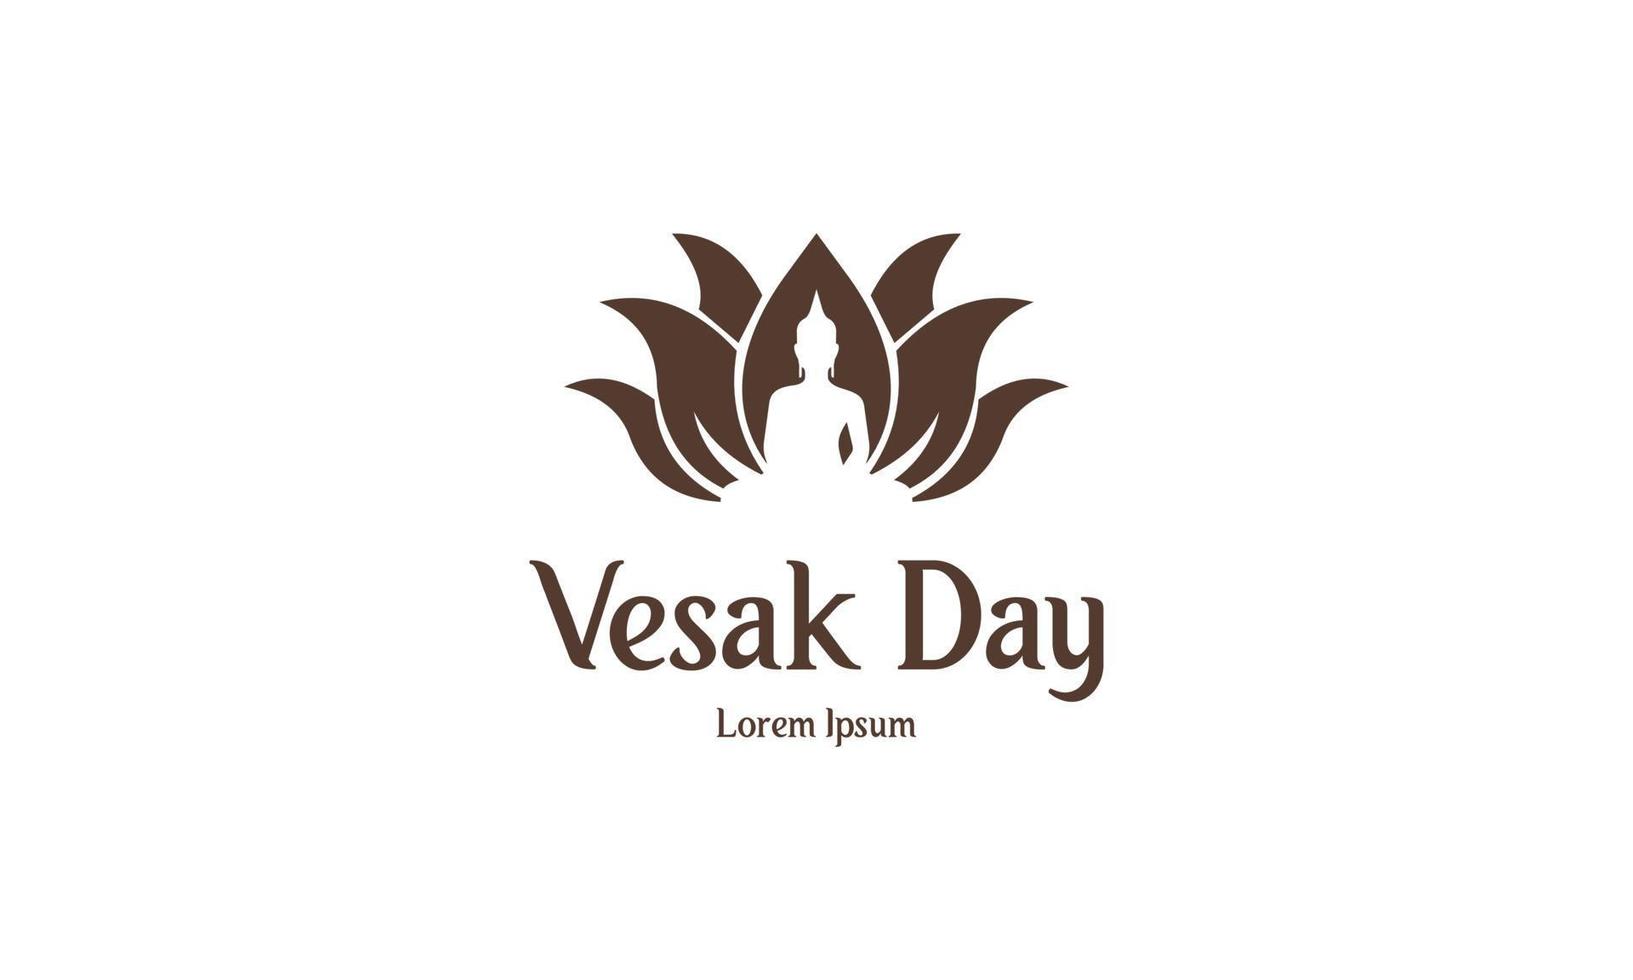 Happy vesak day or buddha purnima logo design vector